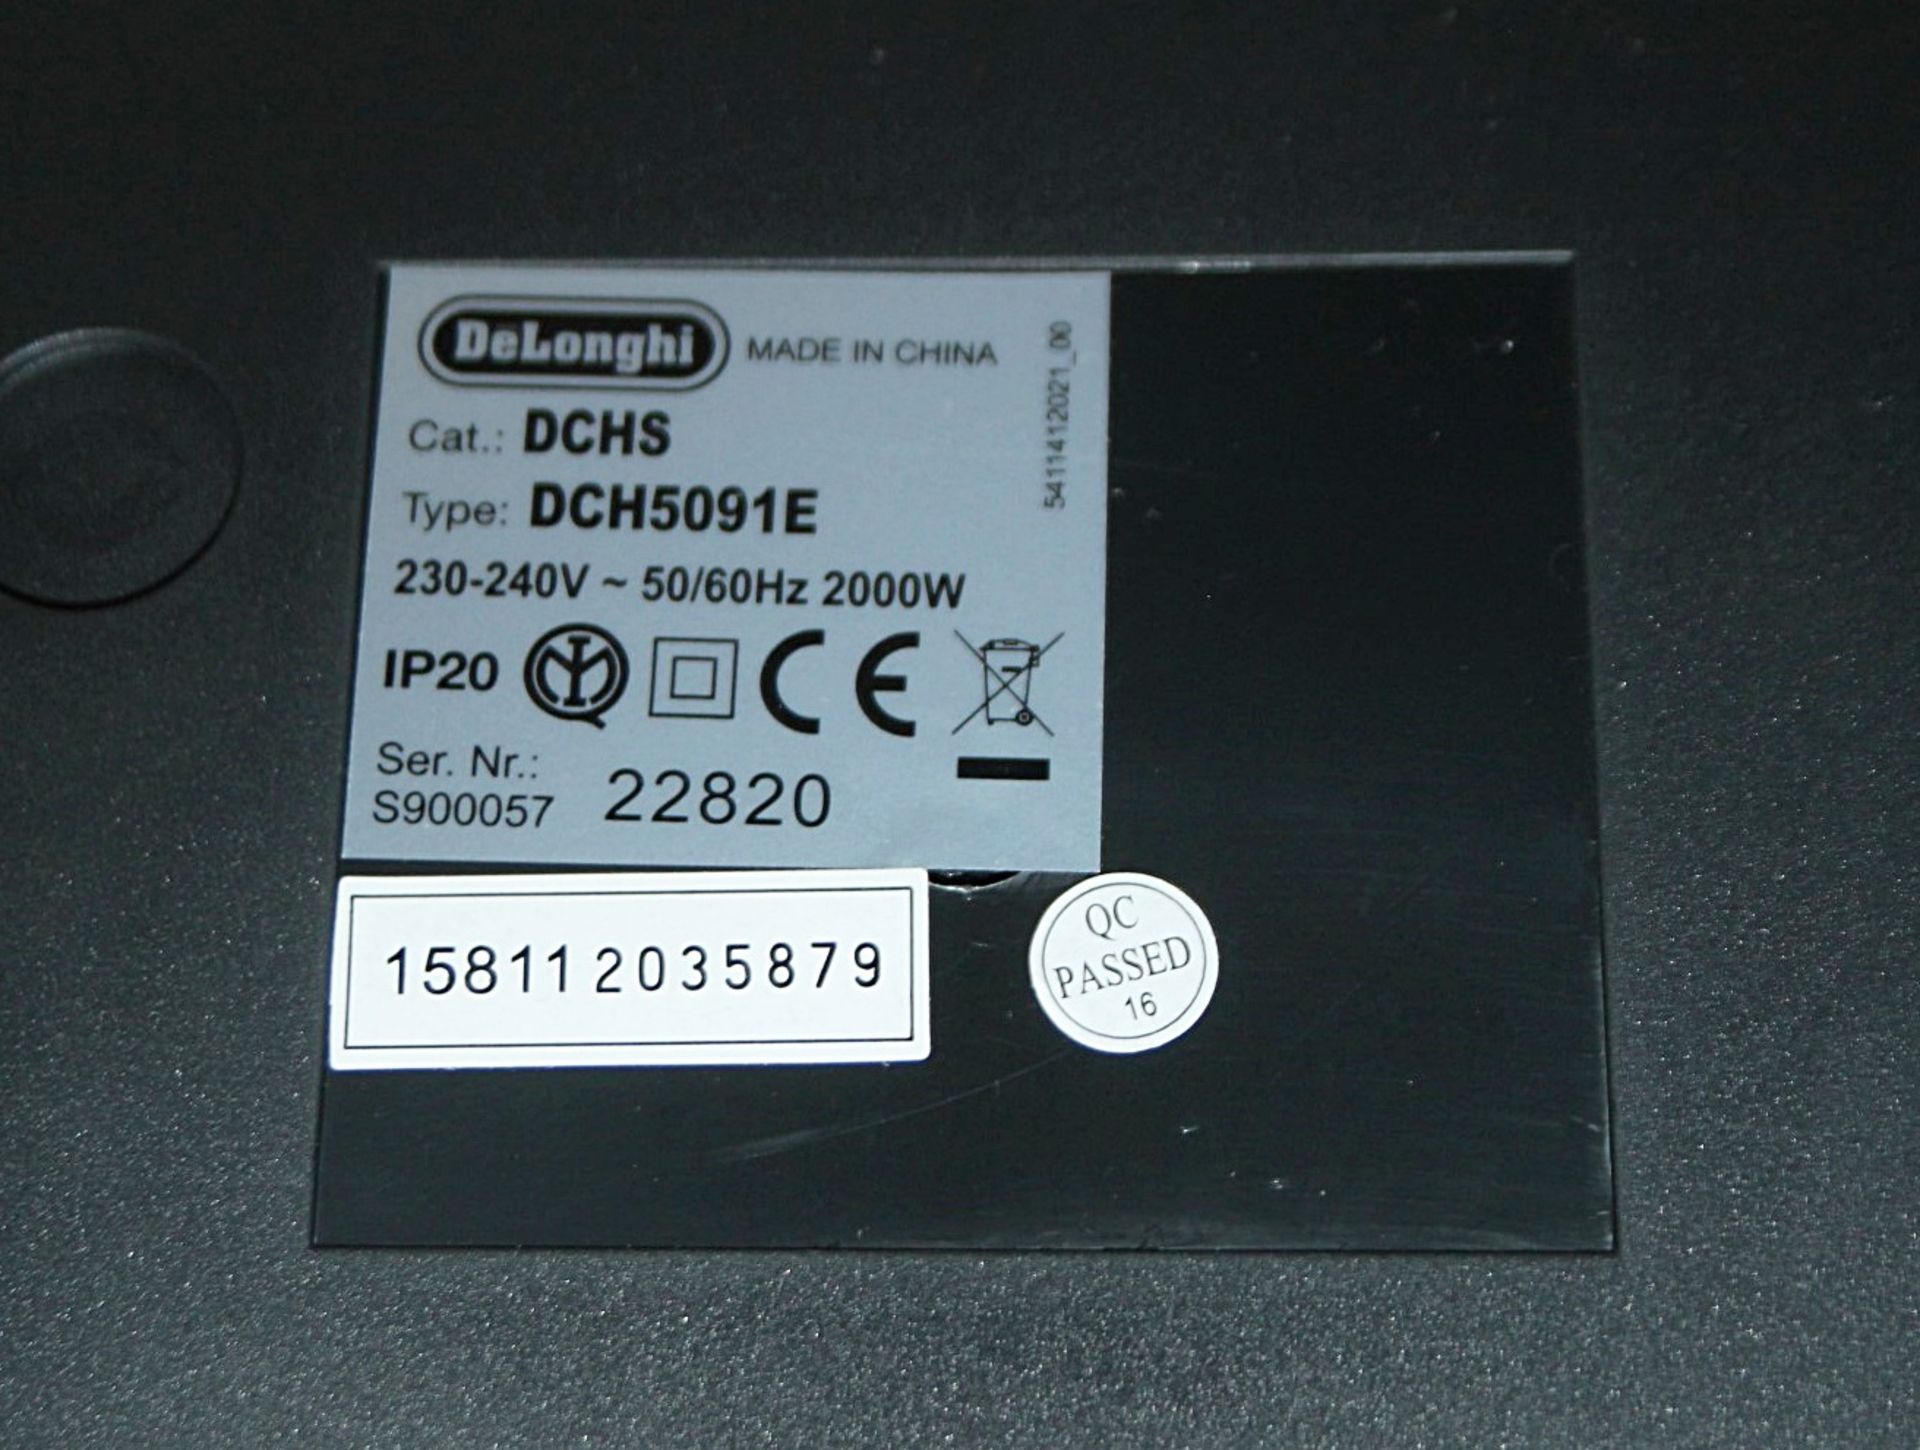 1 x DELONGHI (DCH5091E) Oscillating Ceramic Heater - Unused Stock - Ref: HAS927/APR22/WH2/C6 - CL987 - Image 7 of 8